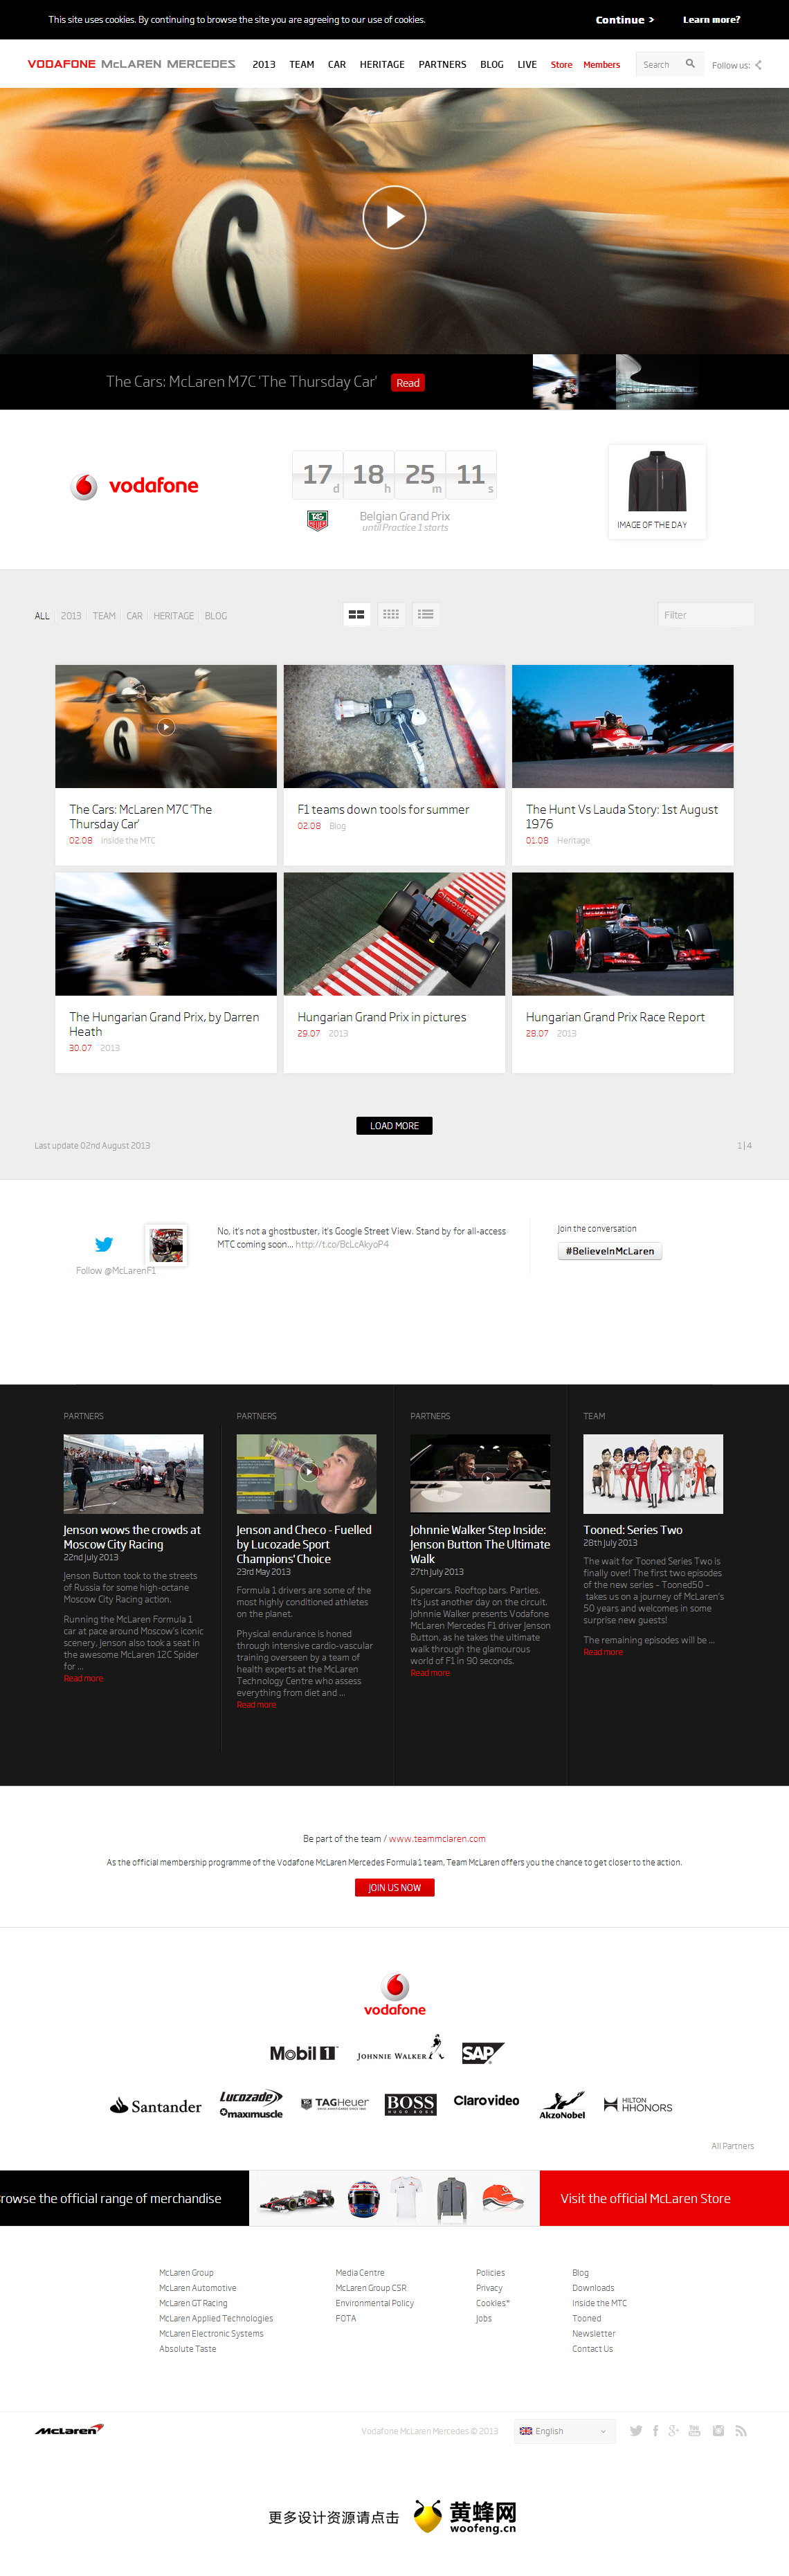 Vodafone迈凯轮 - 梅赛德斯F1车队的官方网站，来源自黄蜂网https://woofeng.cn/